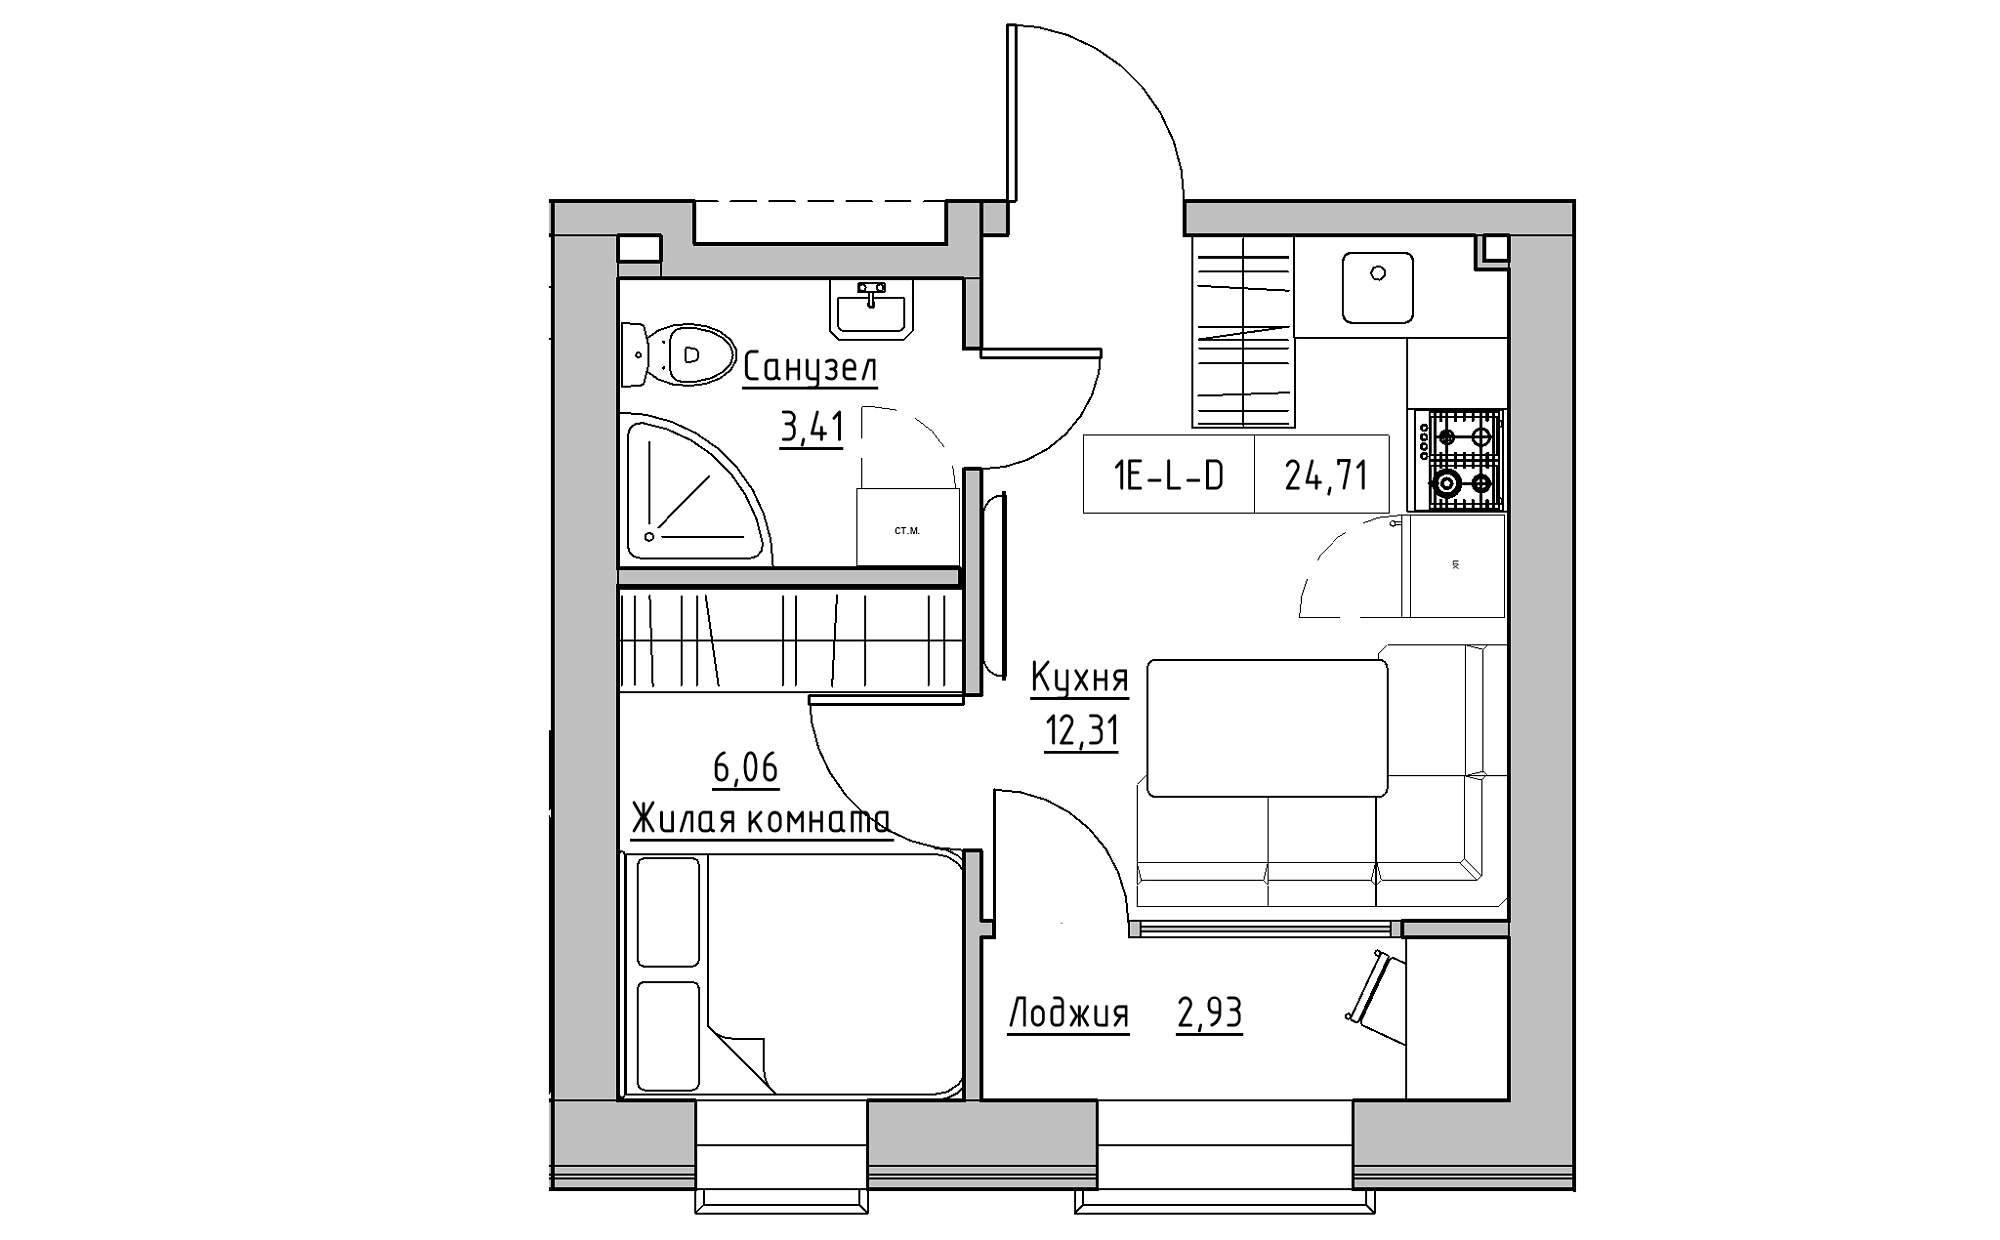 Planning 1-rm flats area 24.71m2, KS-022-05/0002.